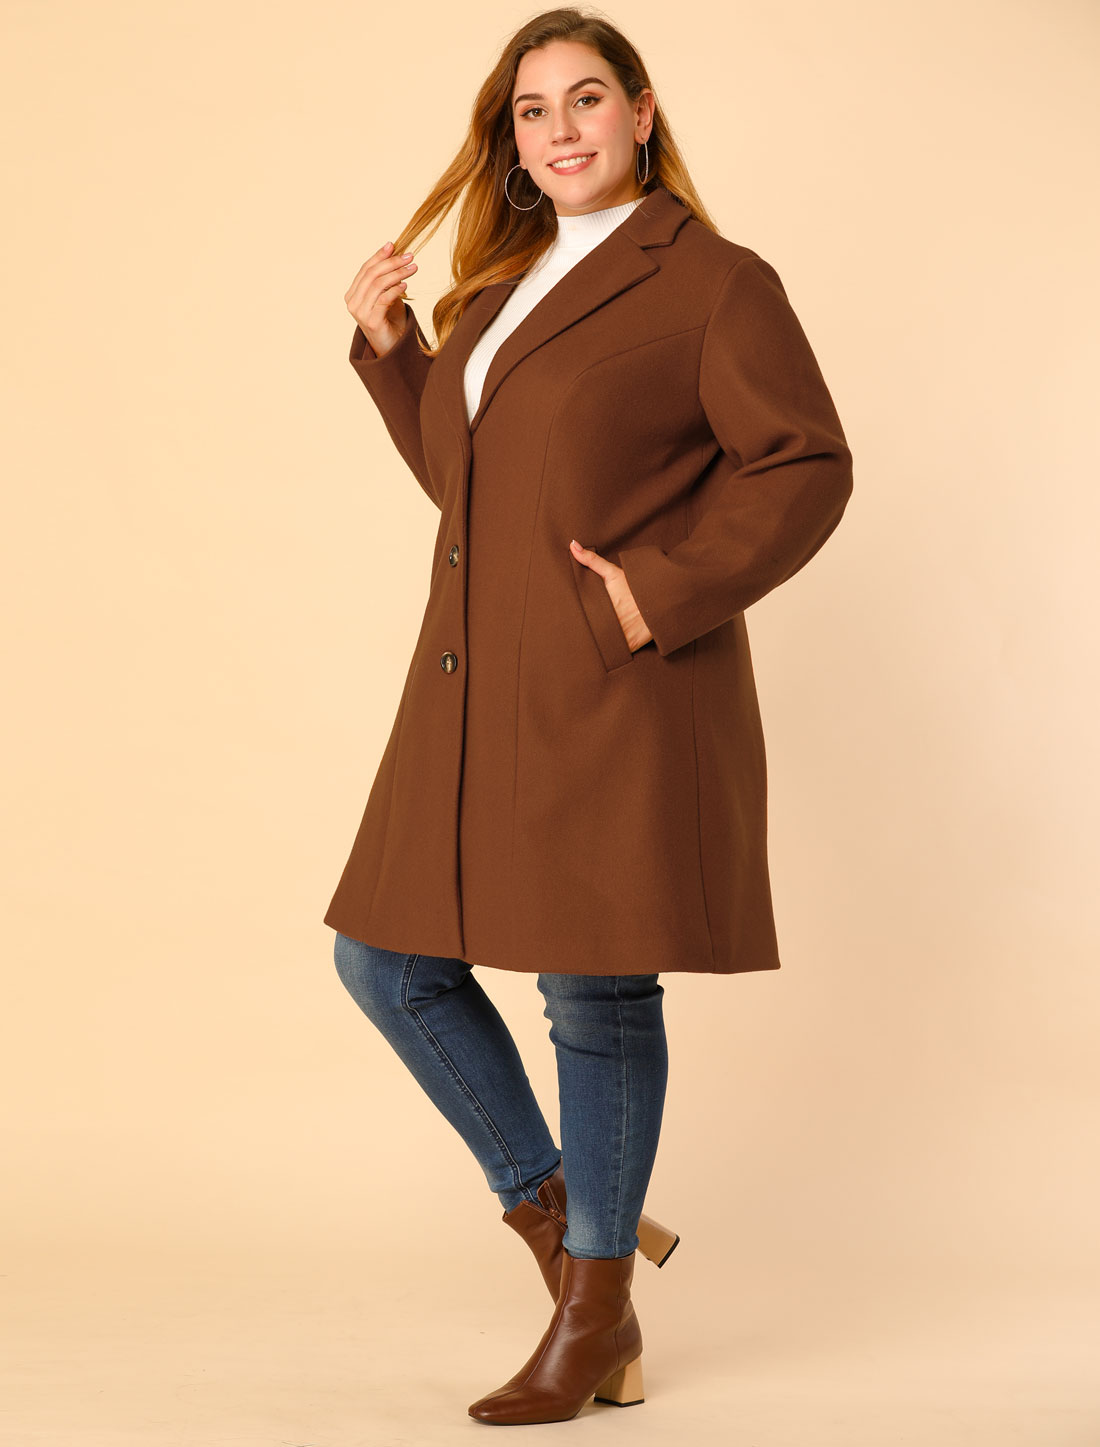 Unique Bargains Agnes Orinda Women's Plus Size Winter Coats Elegant Notched Lapel Single Breasted Coat